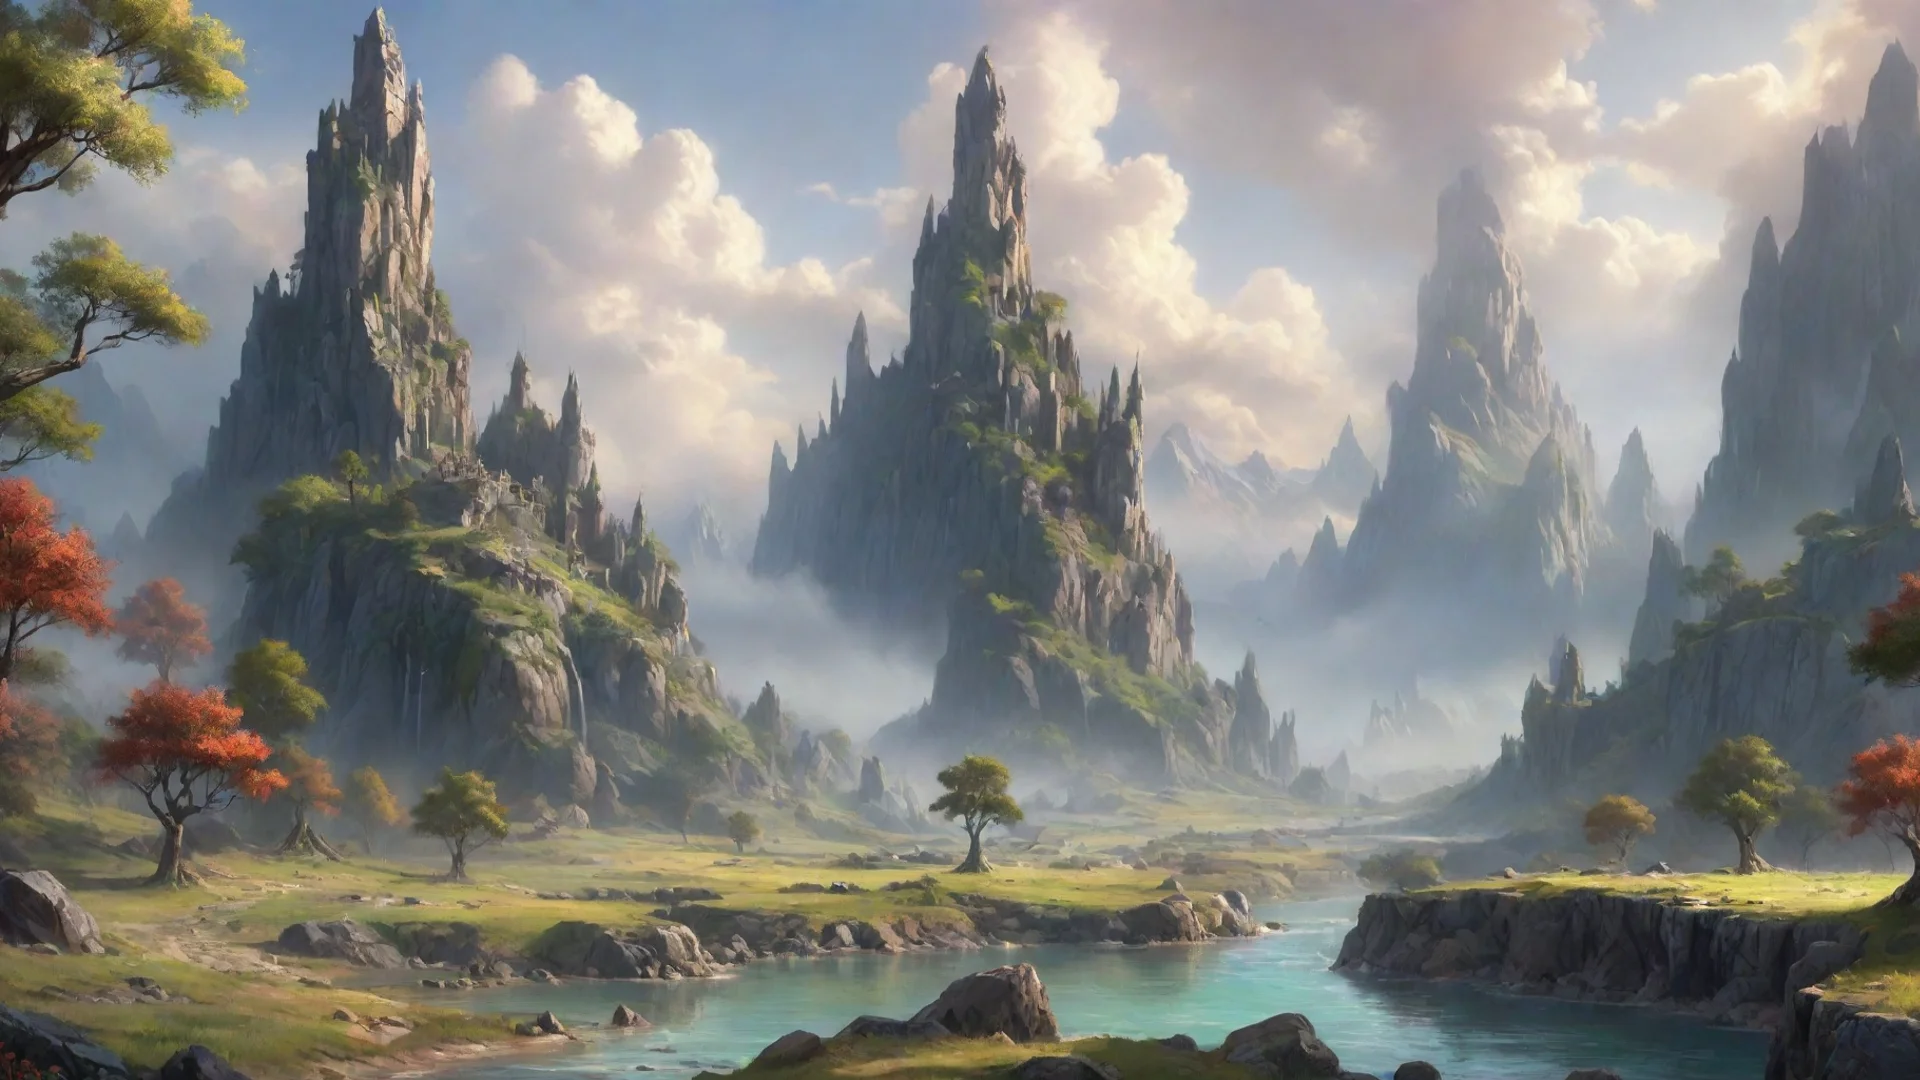 amazing epic fantasy landscape ue5 painterly long zoom ar 169 awesome portrait 2 wide